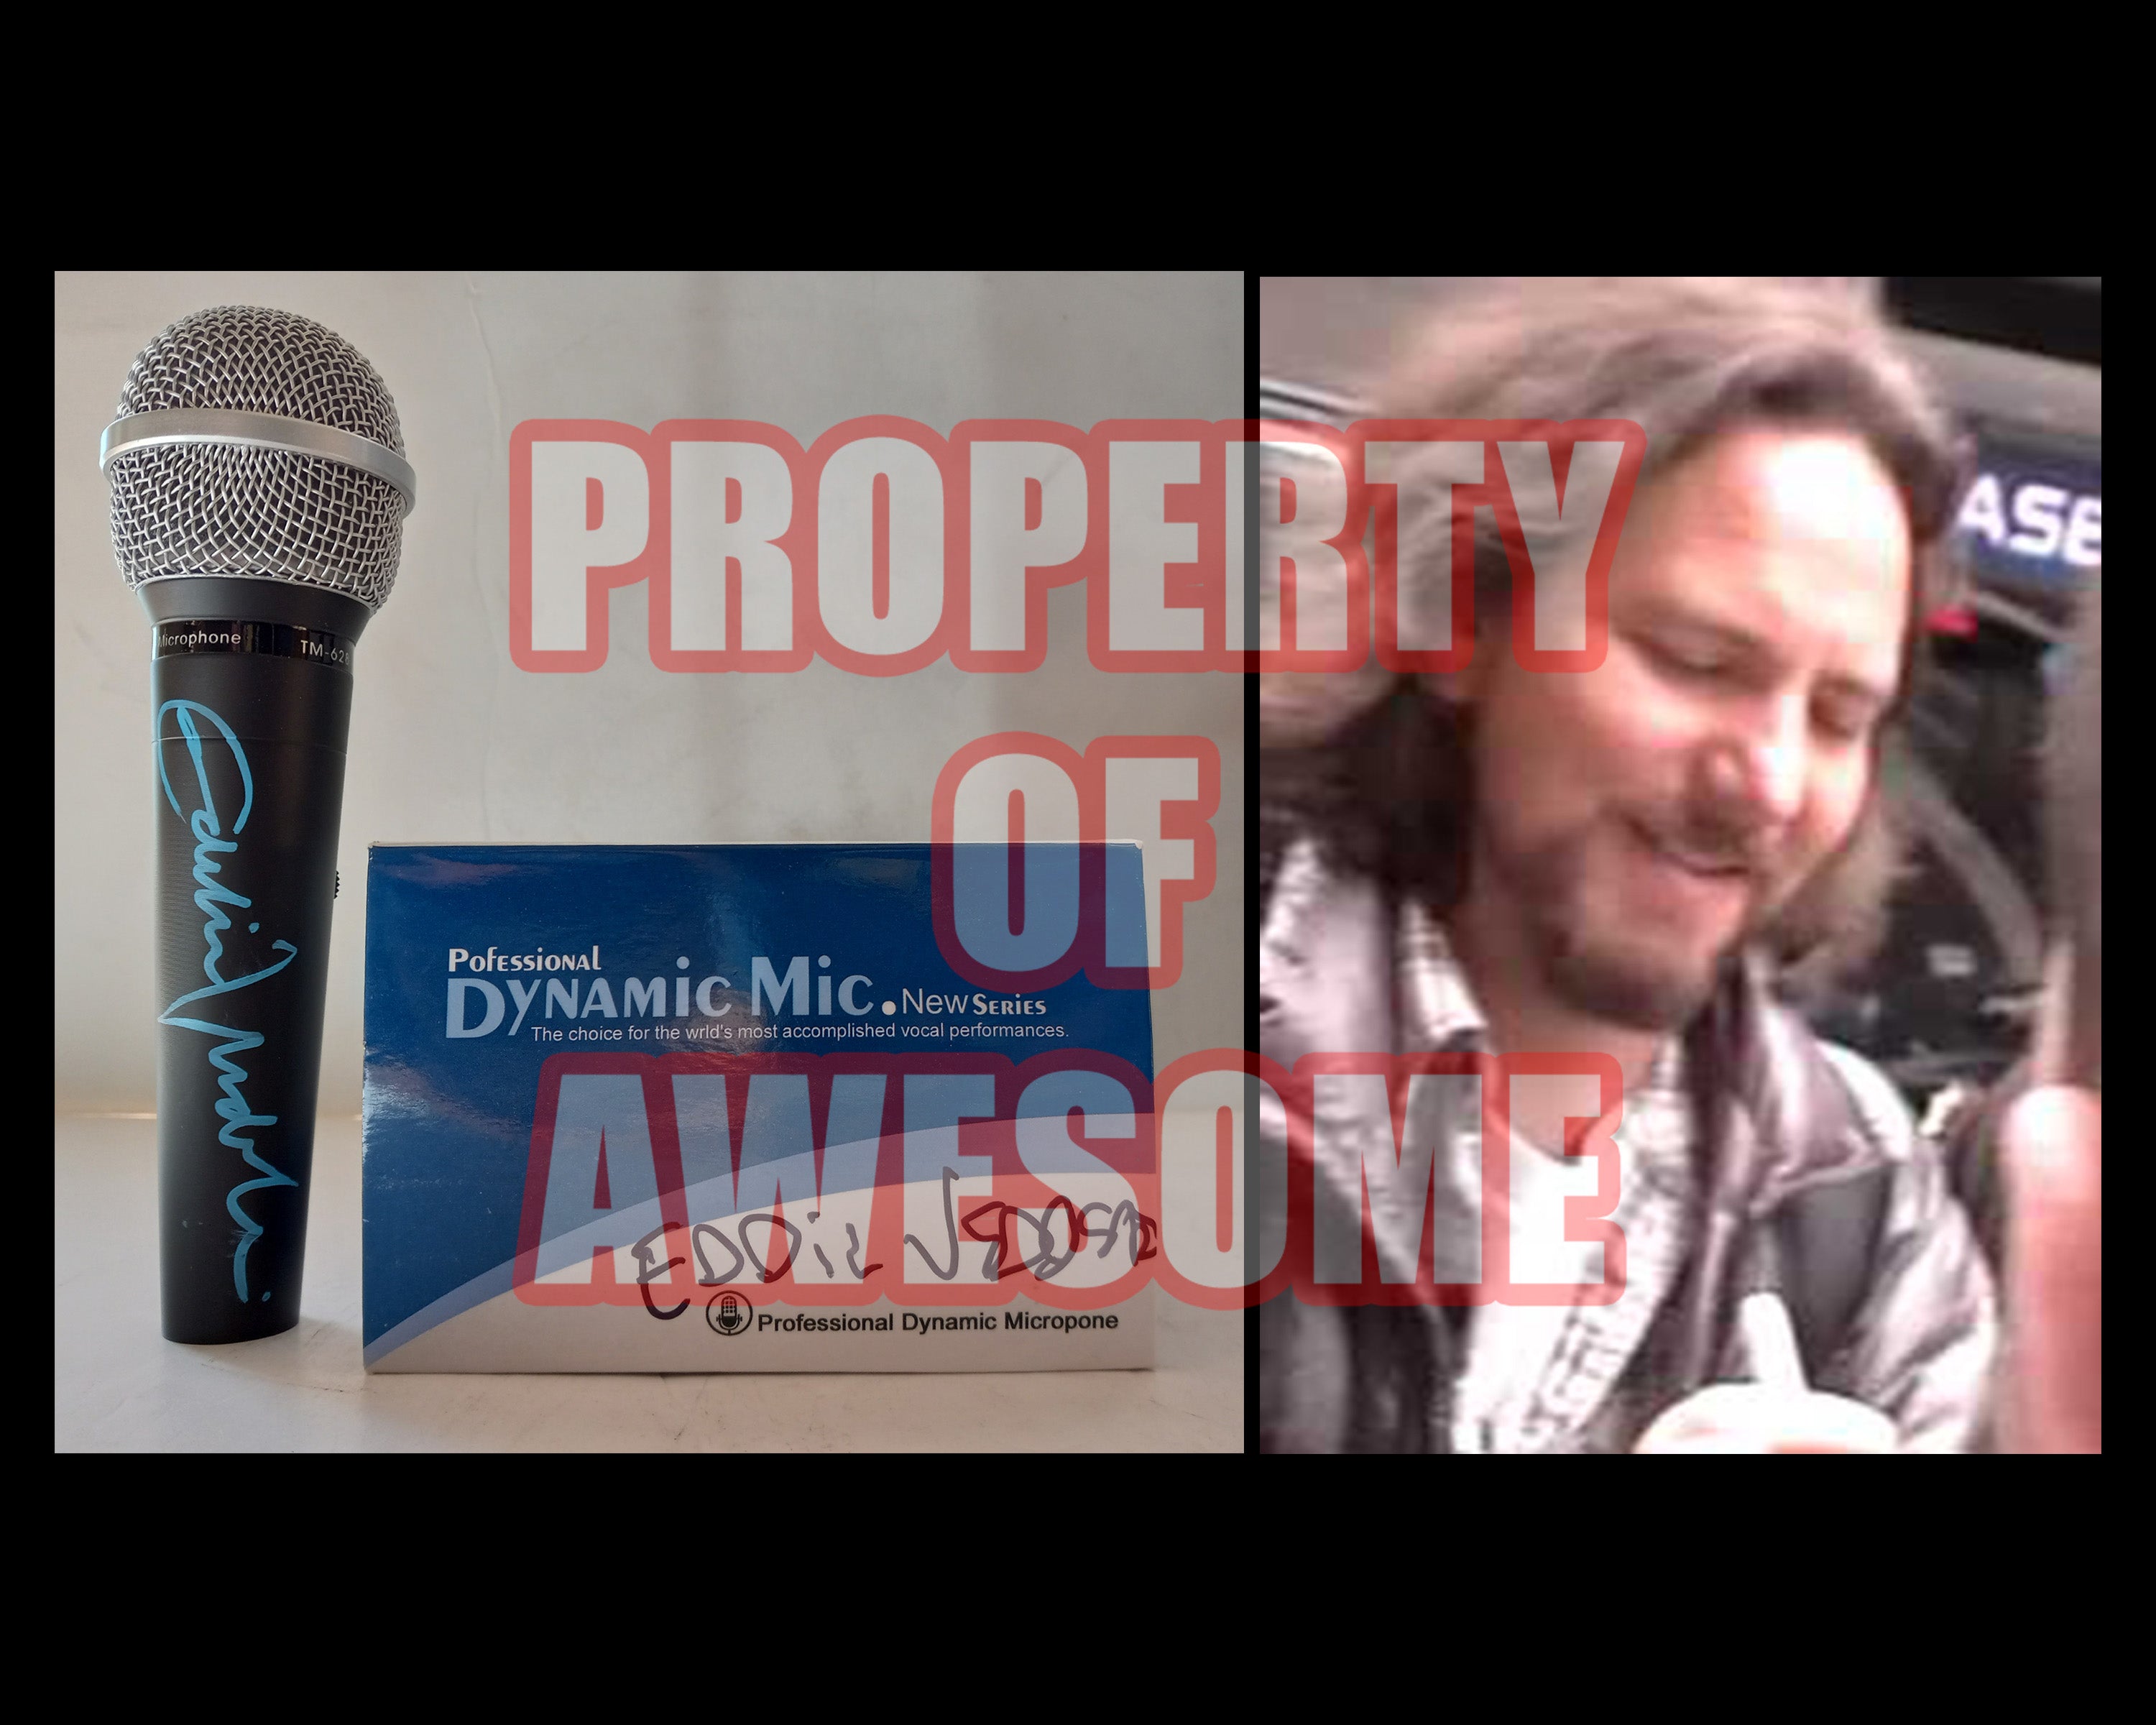 Eddie Vedder Pearl Jam microphone signed with proof